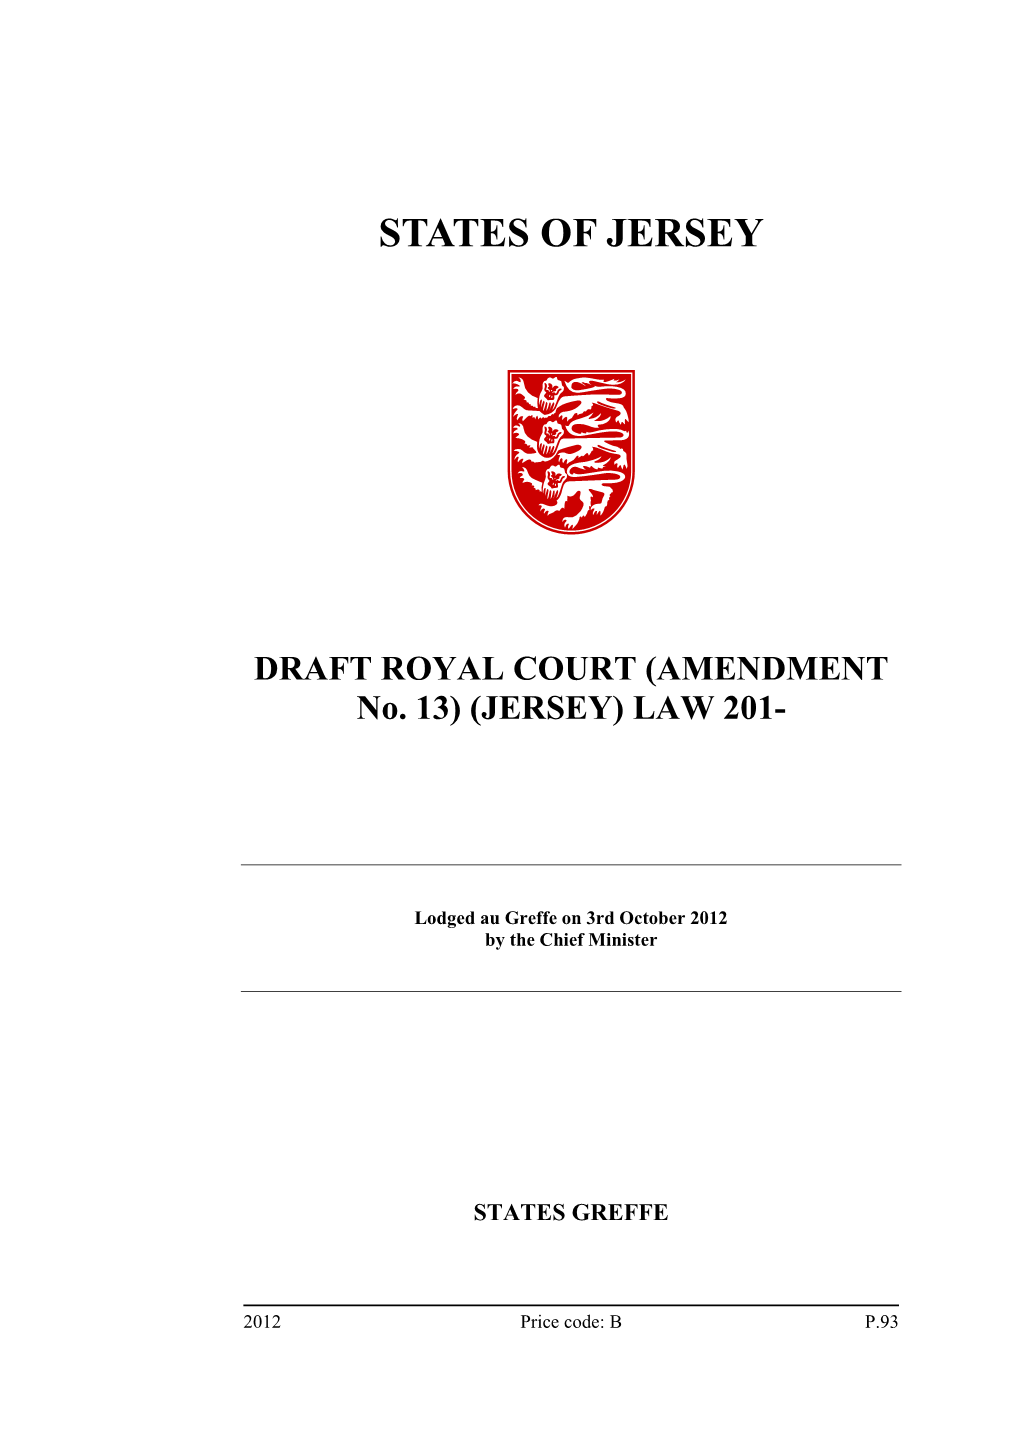 (Jersey) Law 201